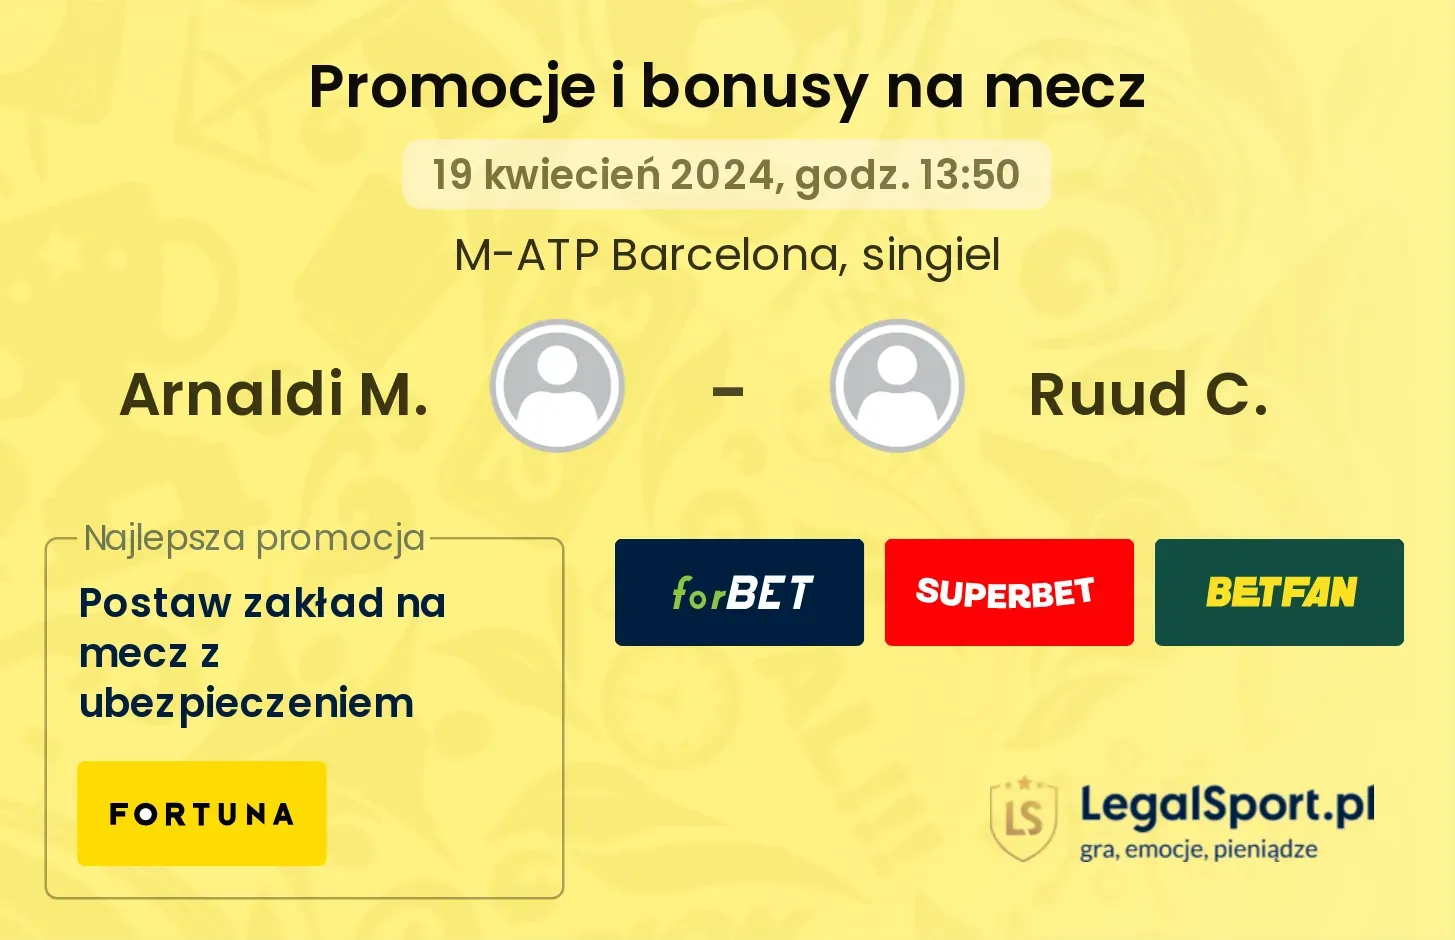 Arnaldi M. - Ruud C. promocje bonusy na mecz